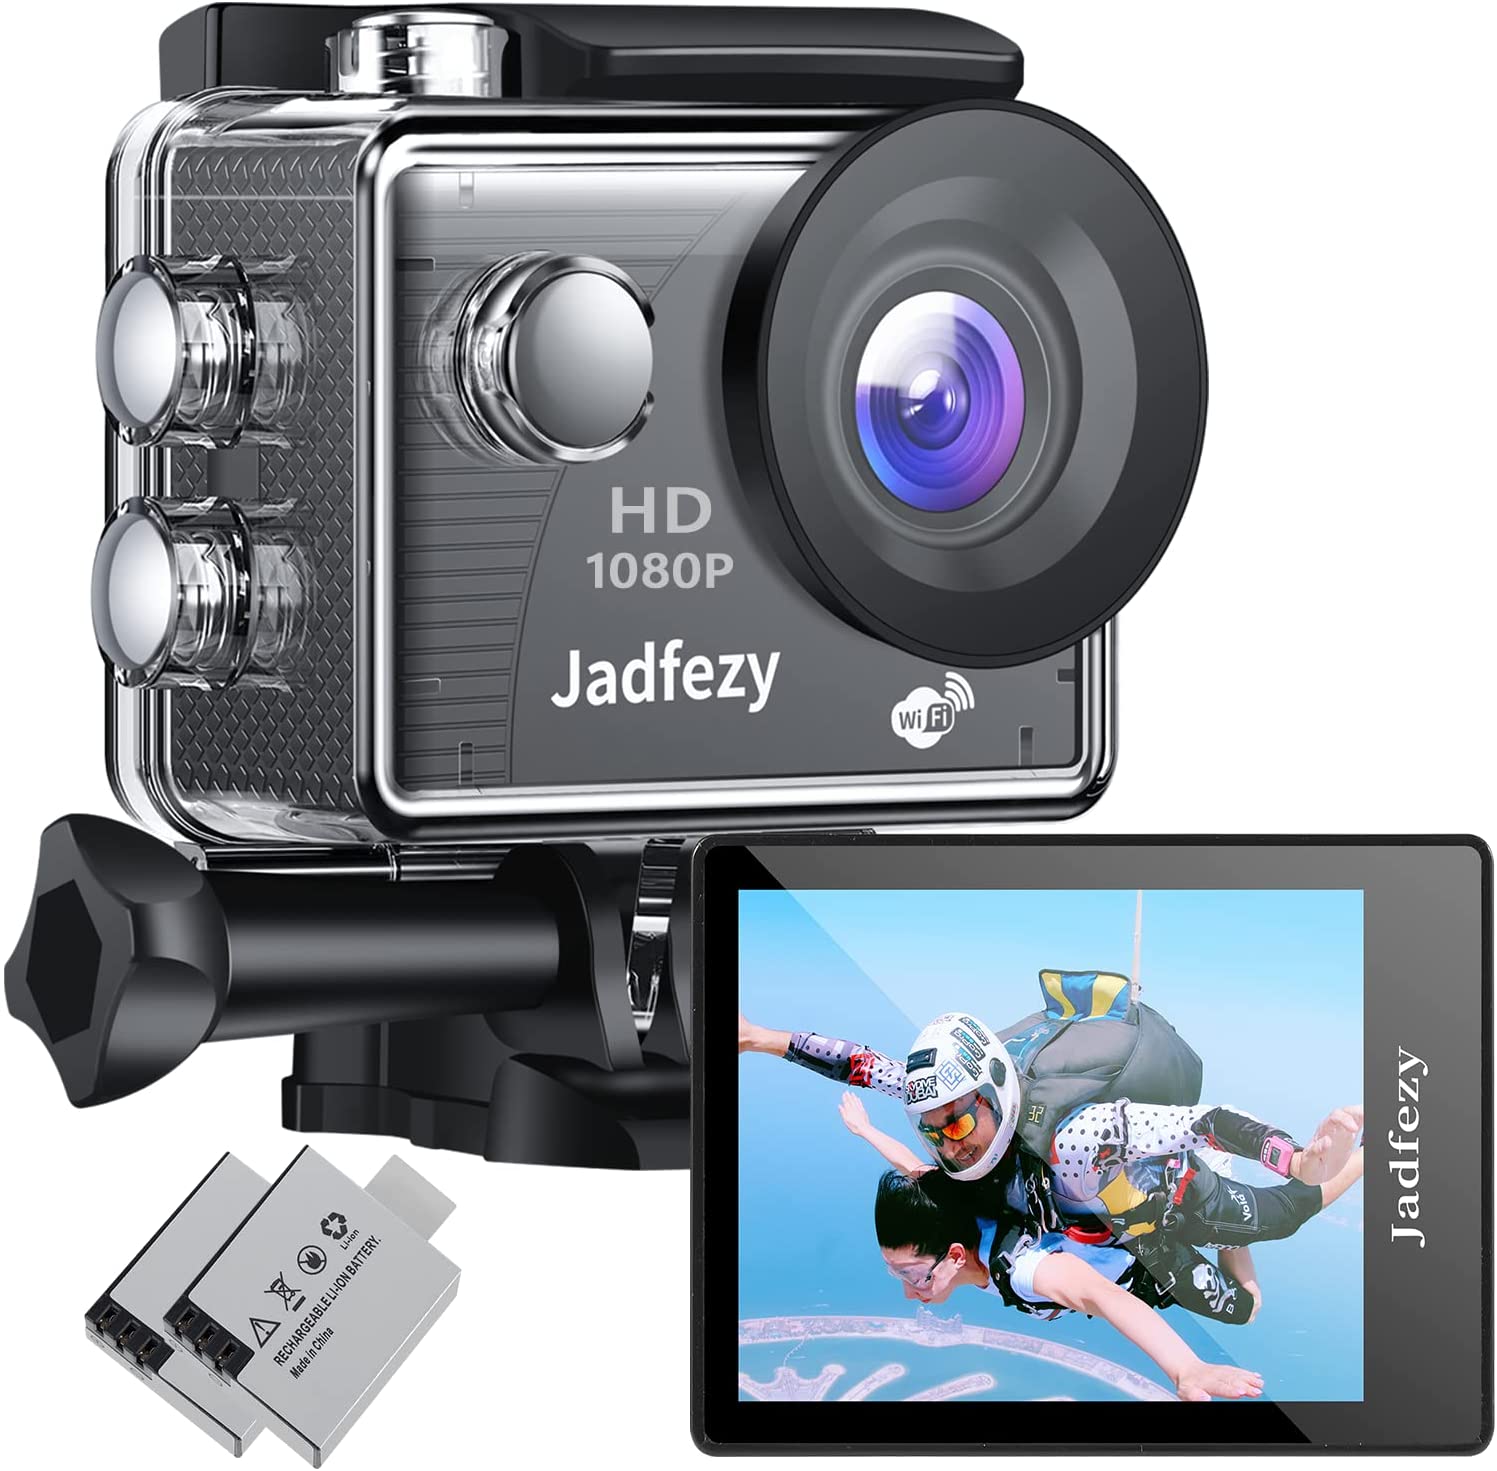 Talentoso Faringe presión Jadfezy WiFi Action Camera Ultra HD 1080P – Electric Zip